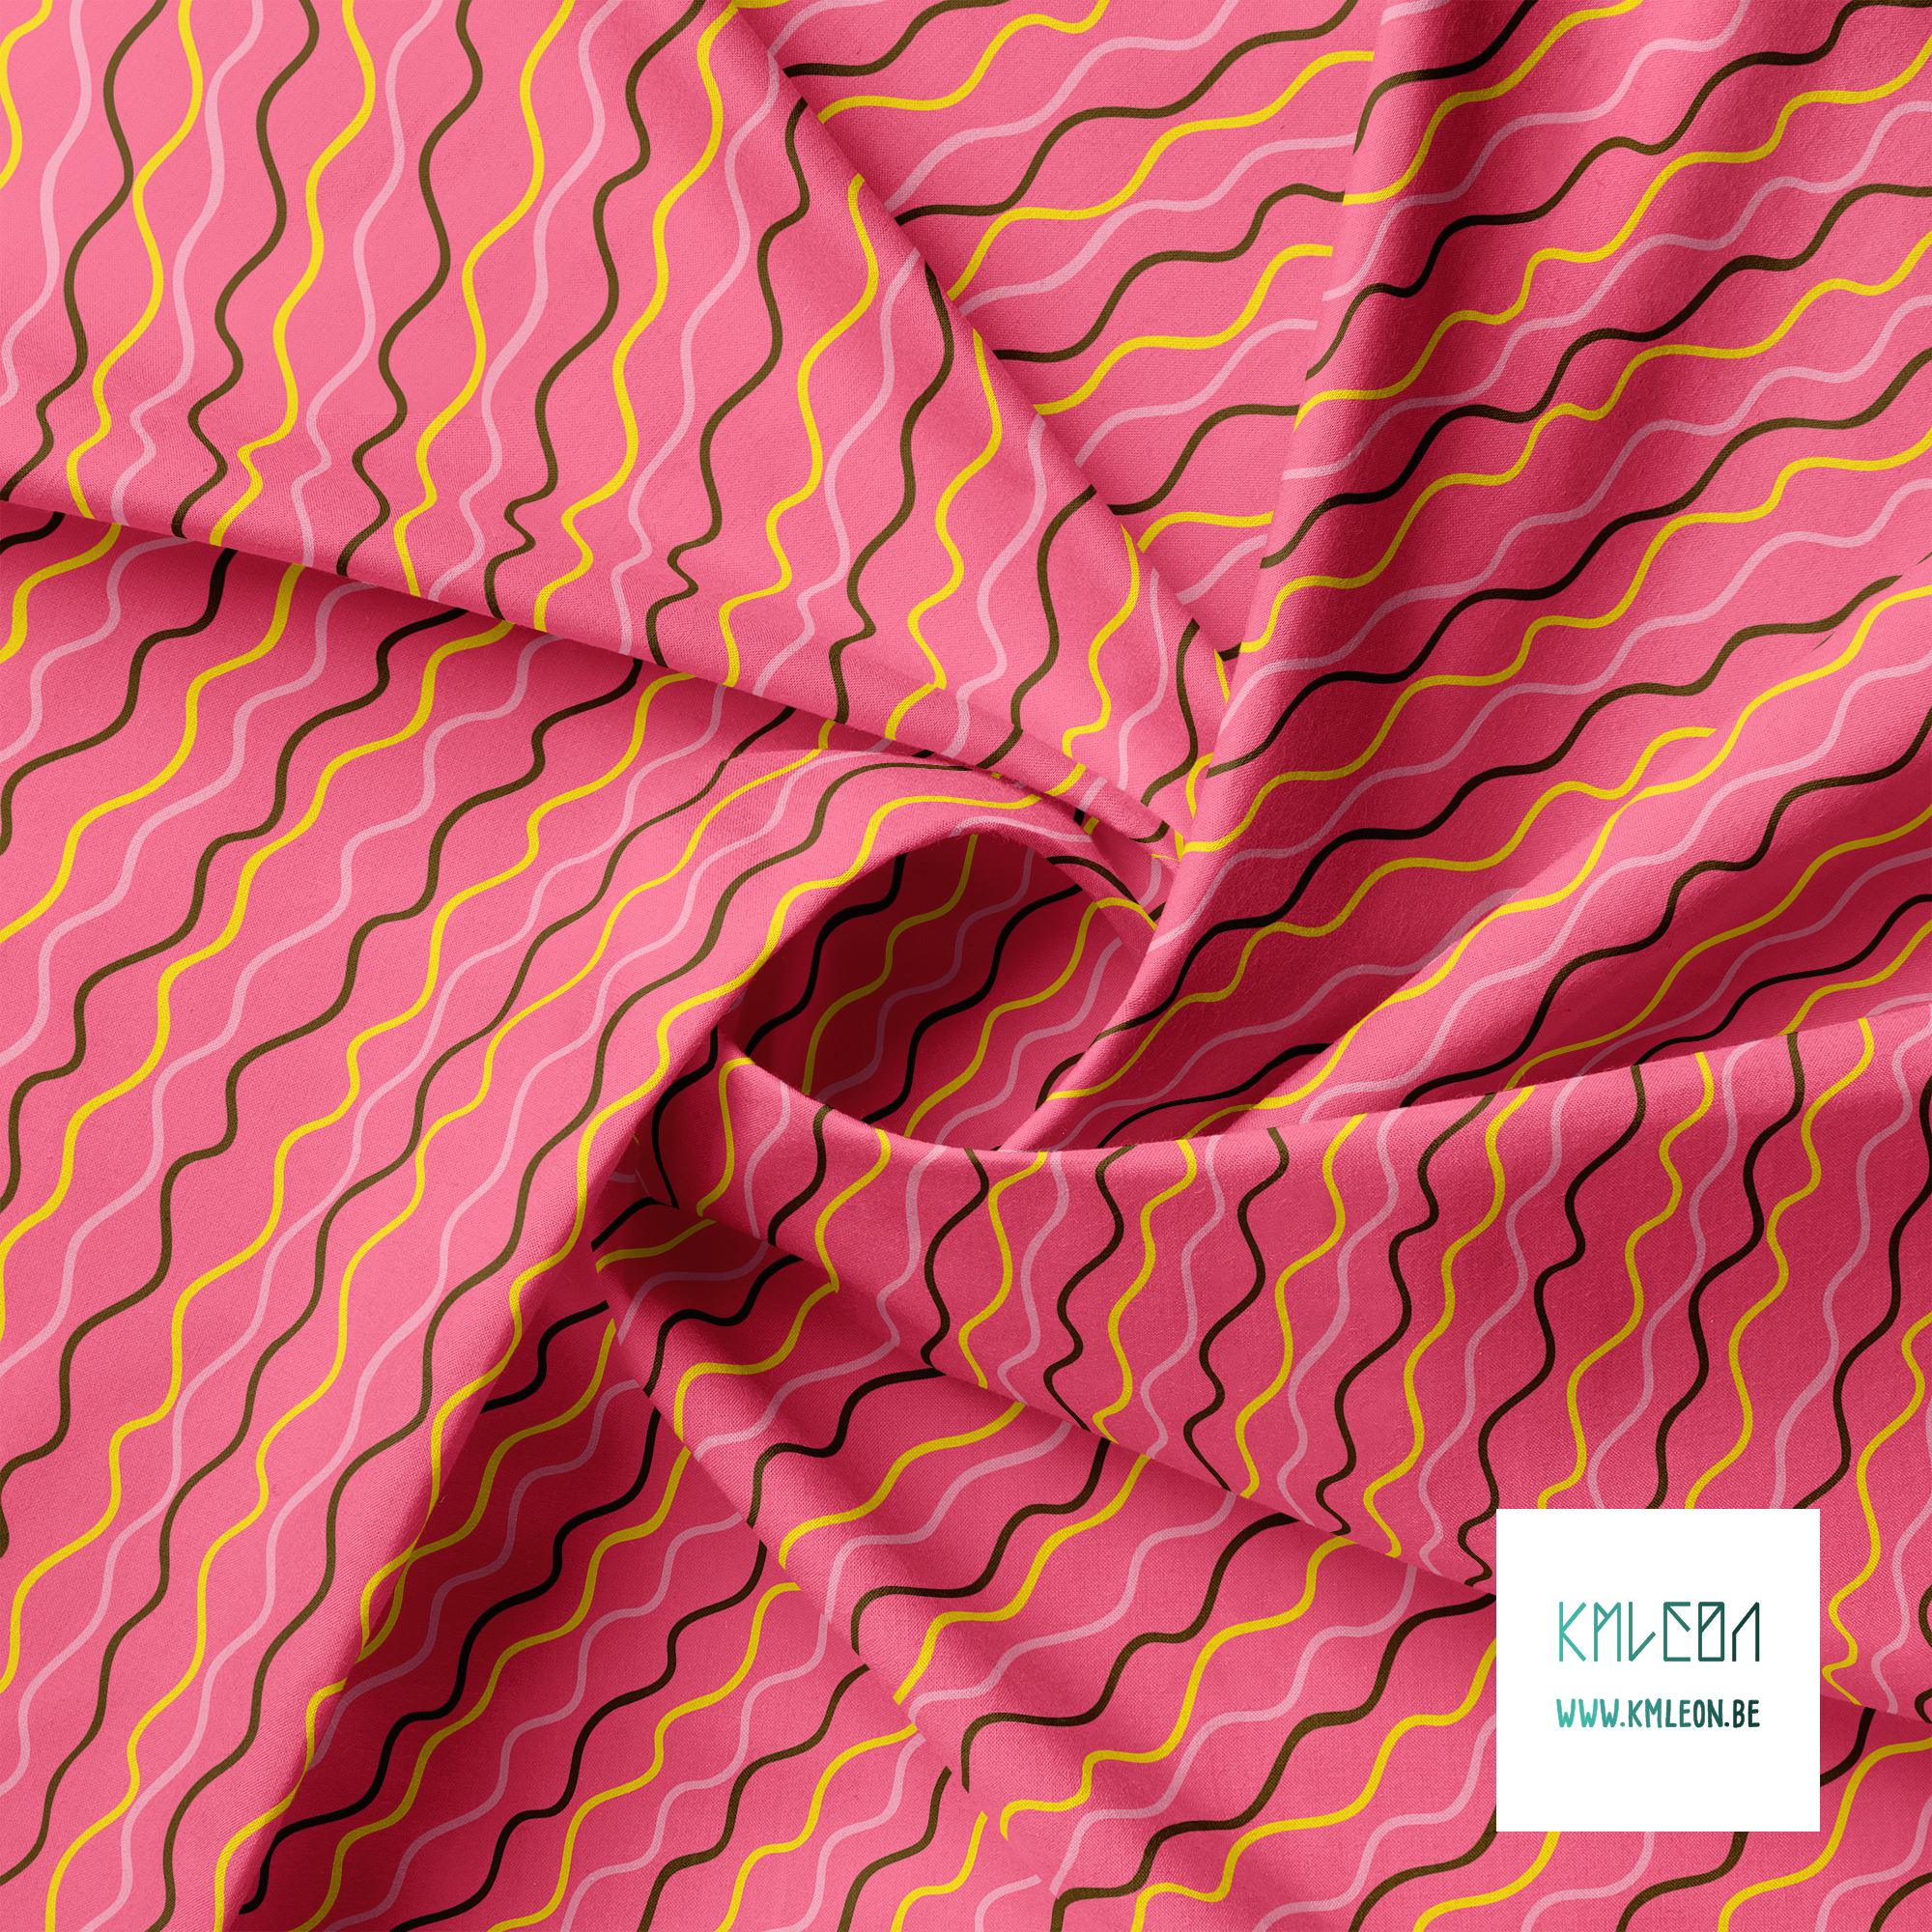 Irregular yellow, pink and brown waves fabric